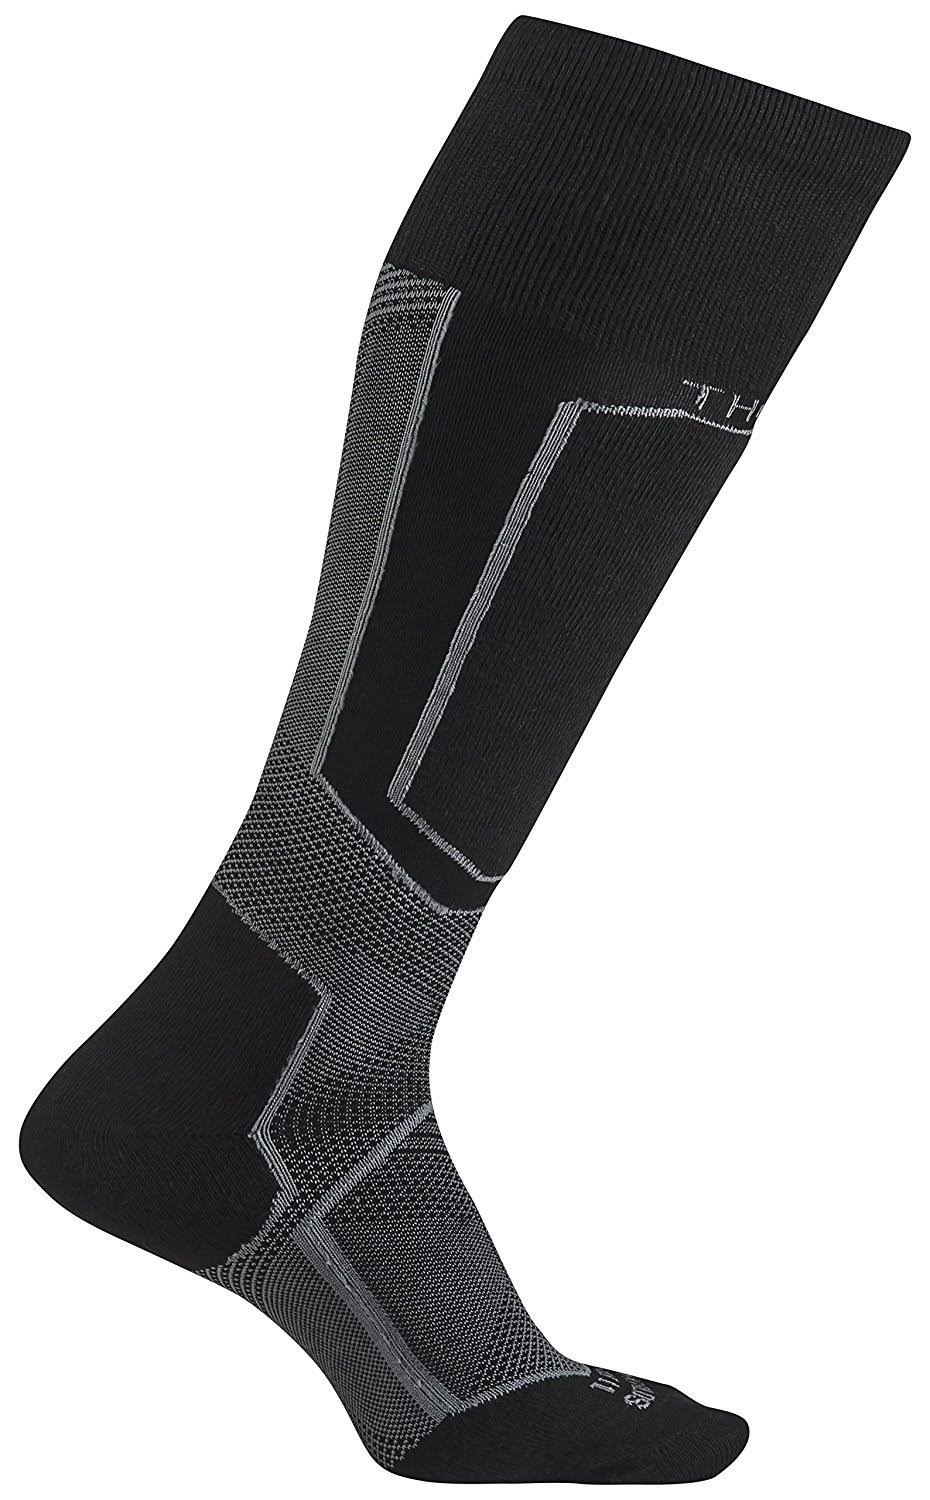 Thorlo Ski Socks - Black, Medium